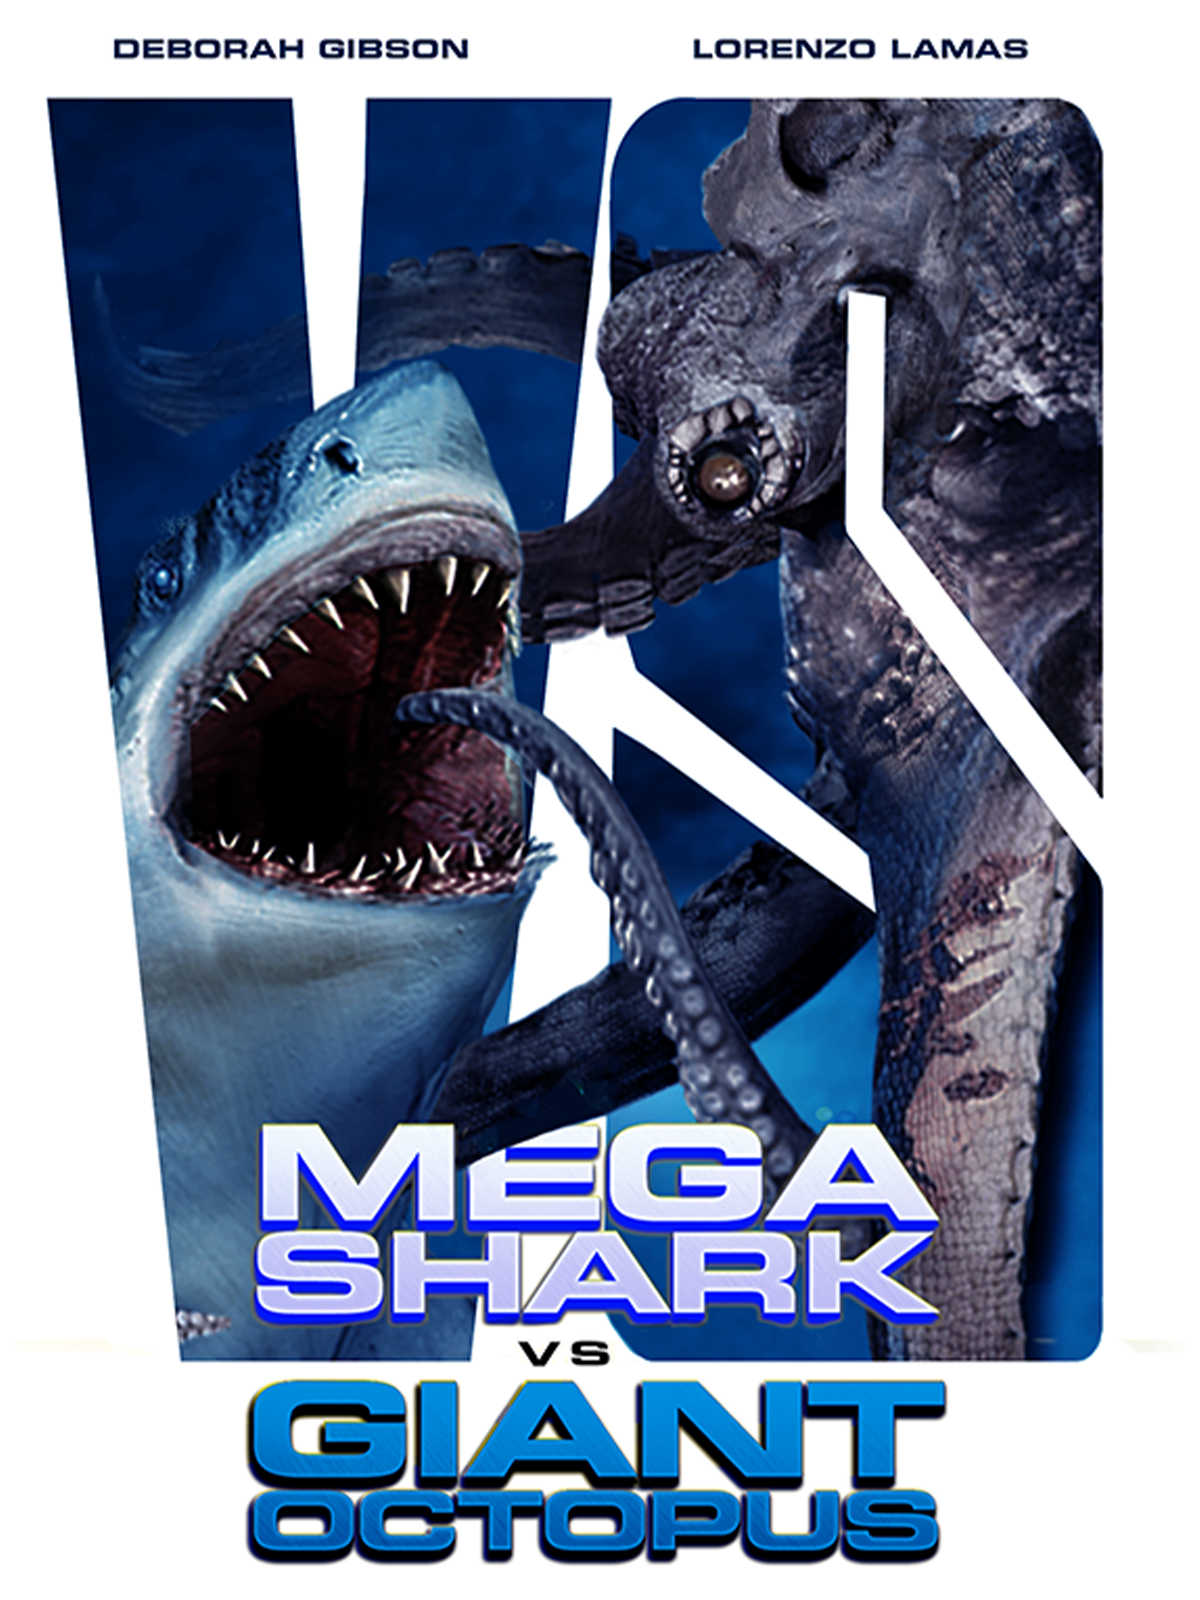 MEGA SHARK VS GIANT OCTOPUS 1200×1600 AMAZON